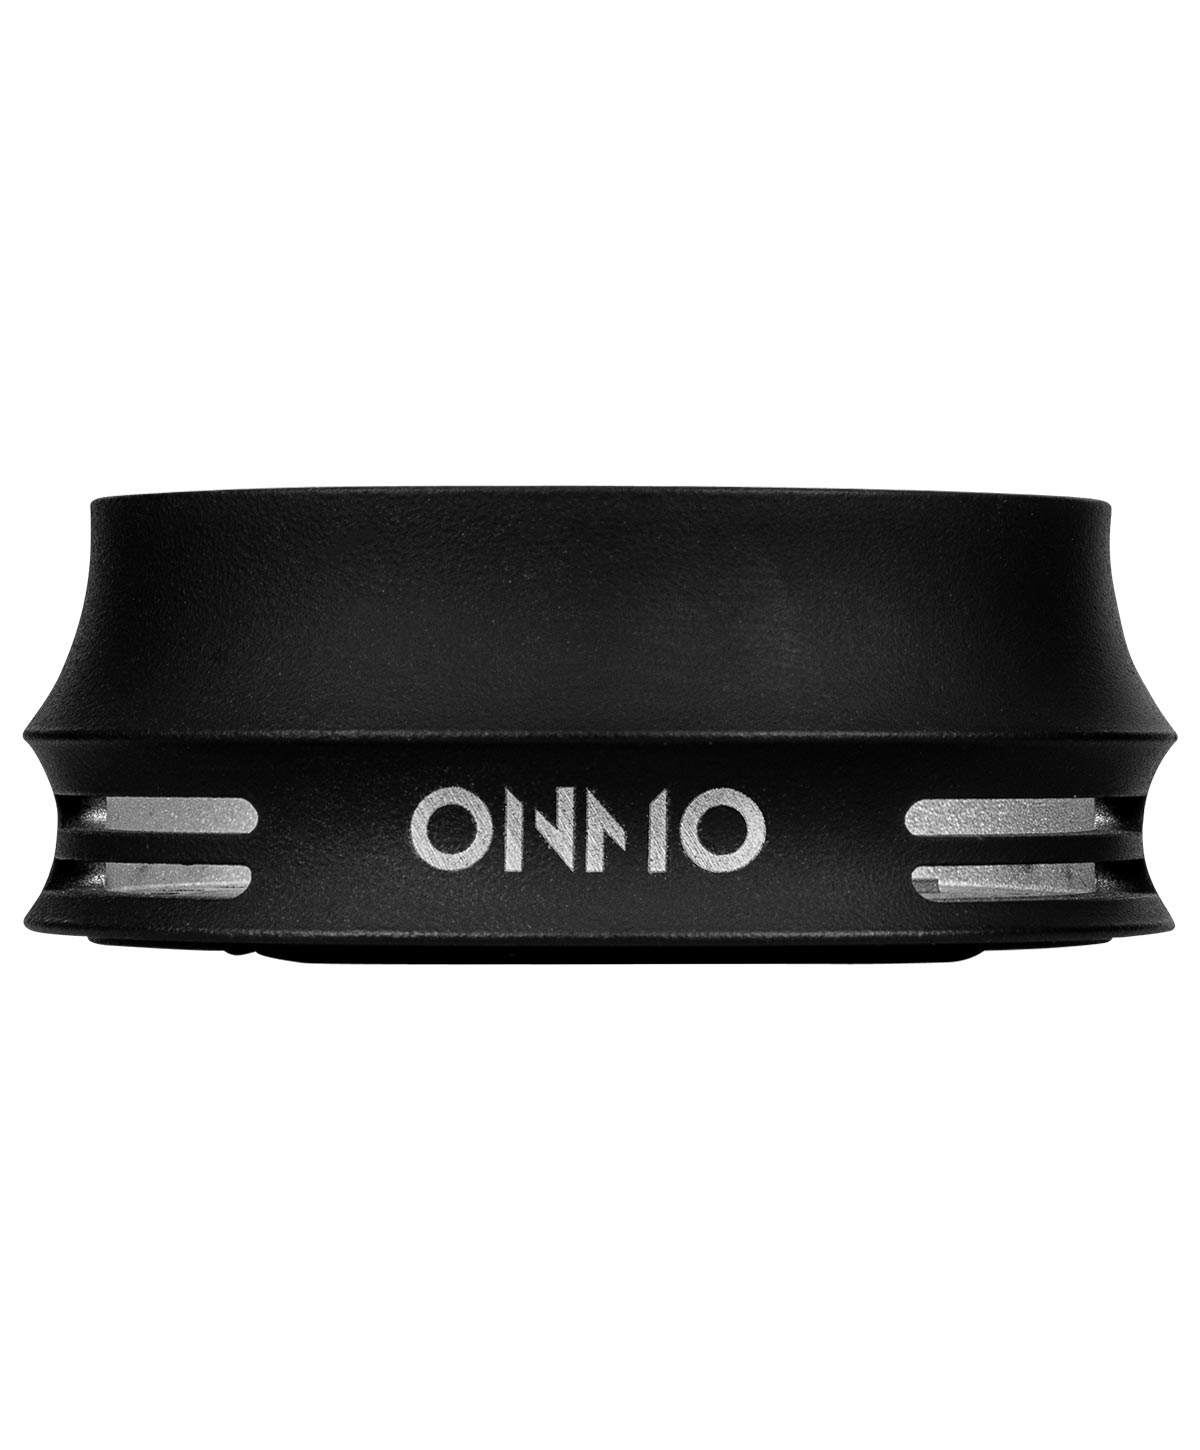 ONMO | HMD | Black